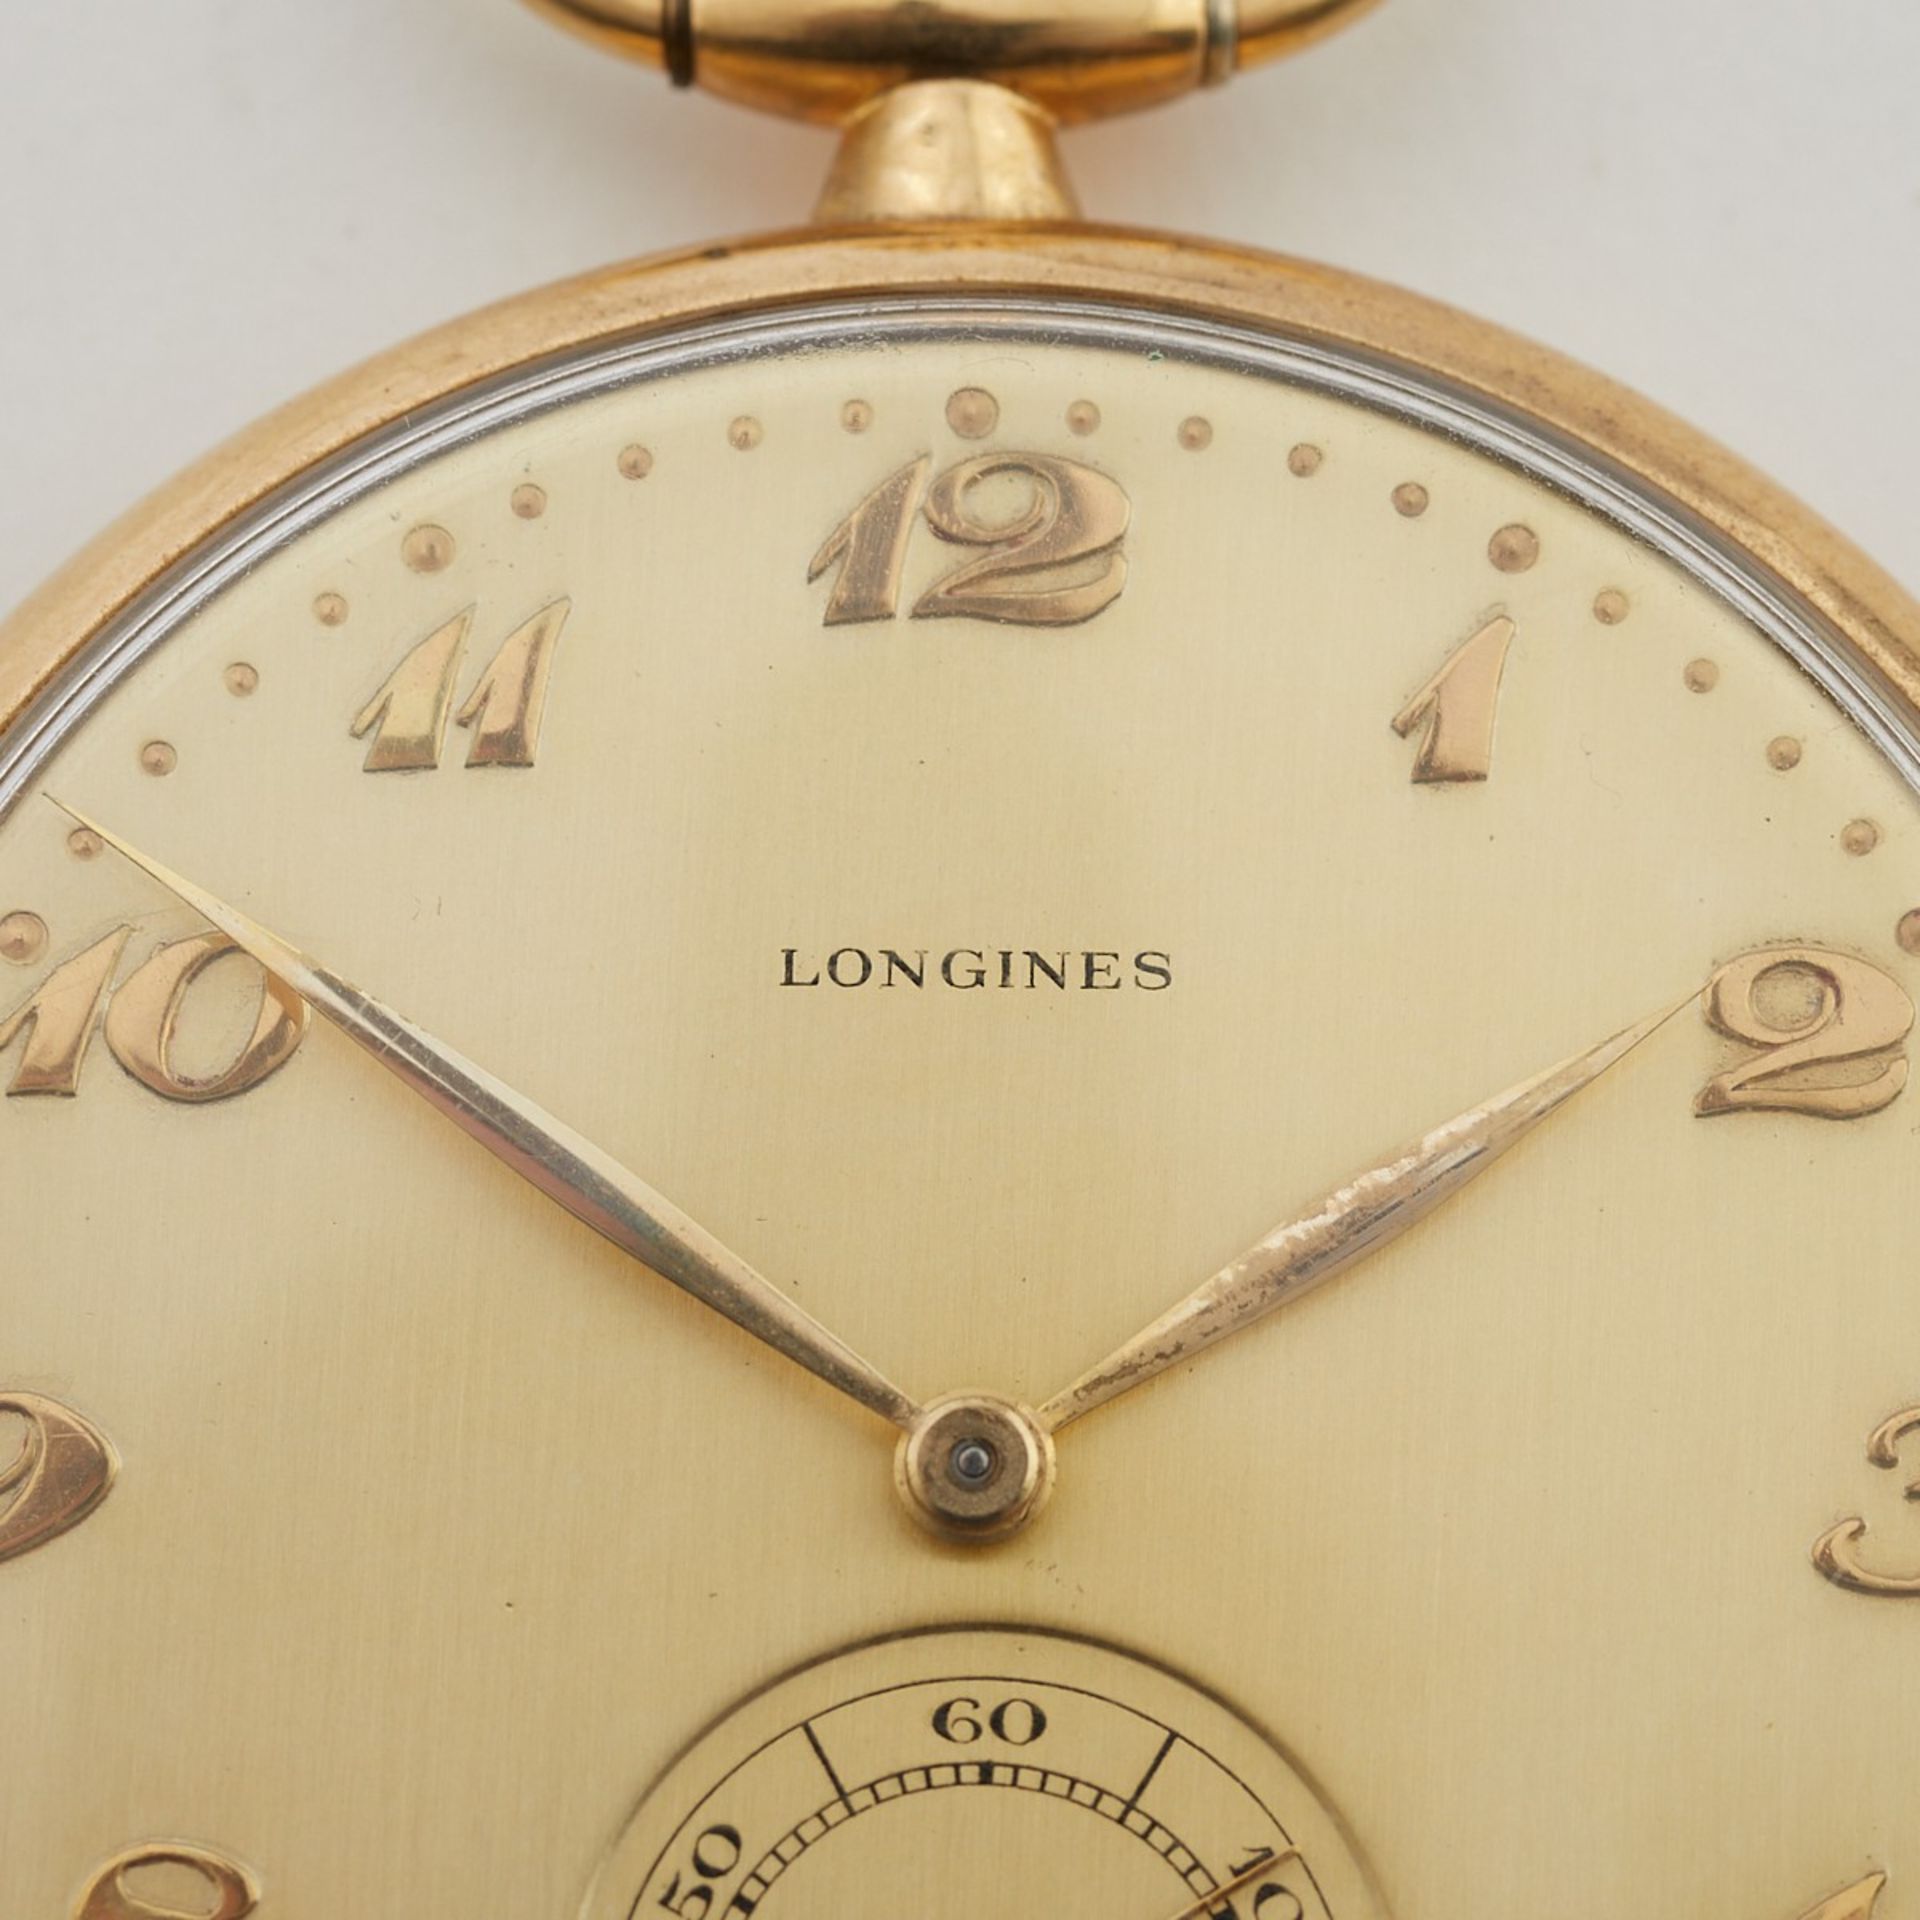 Longines 14K 56 Gold Pocket Watch - Image 8 of 8